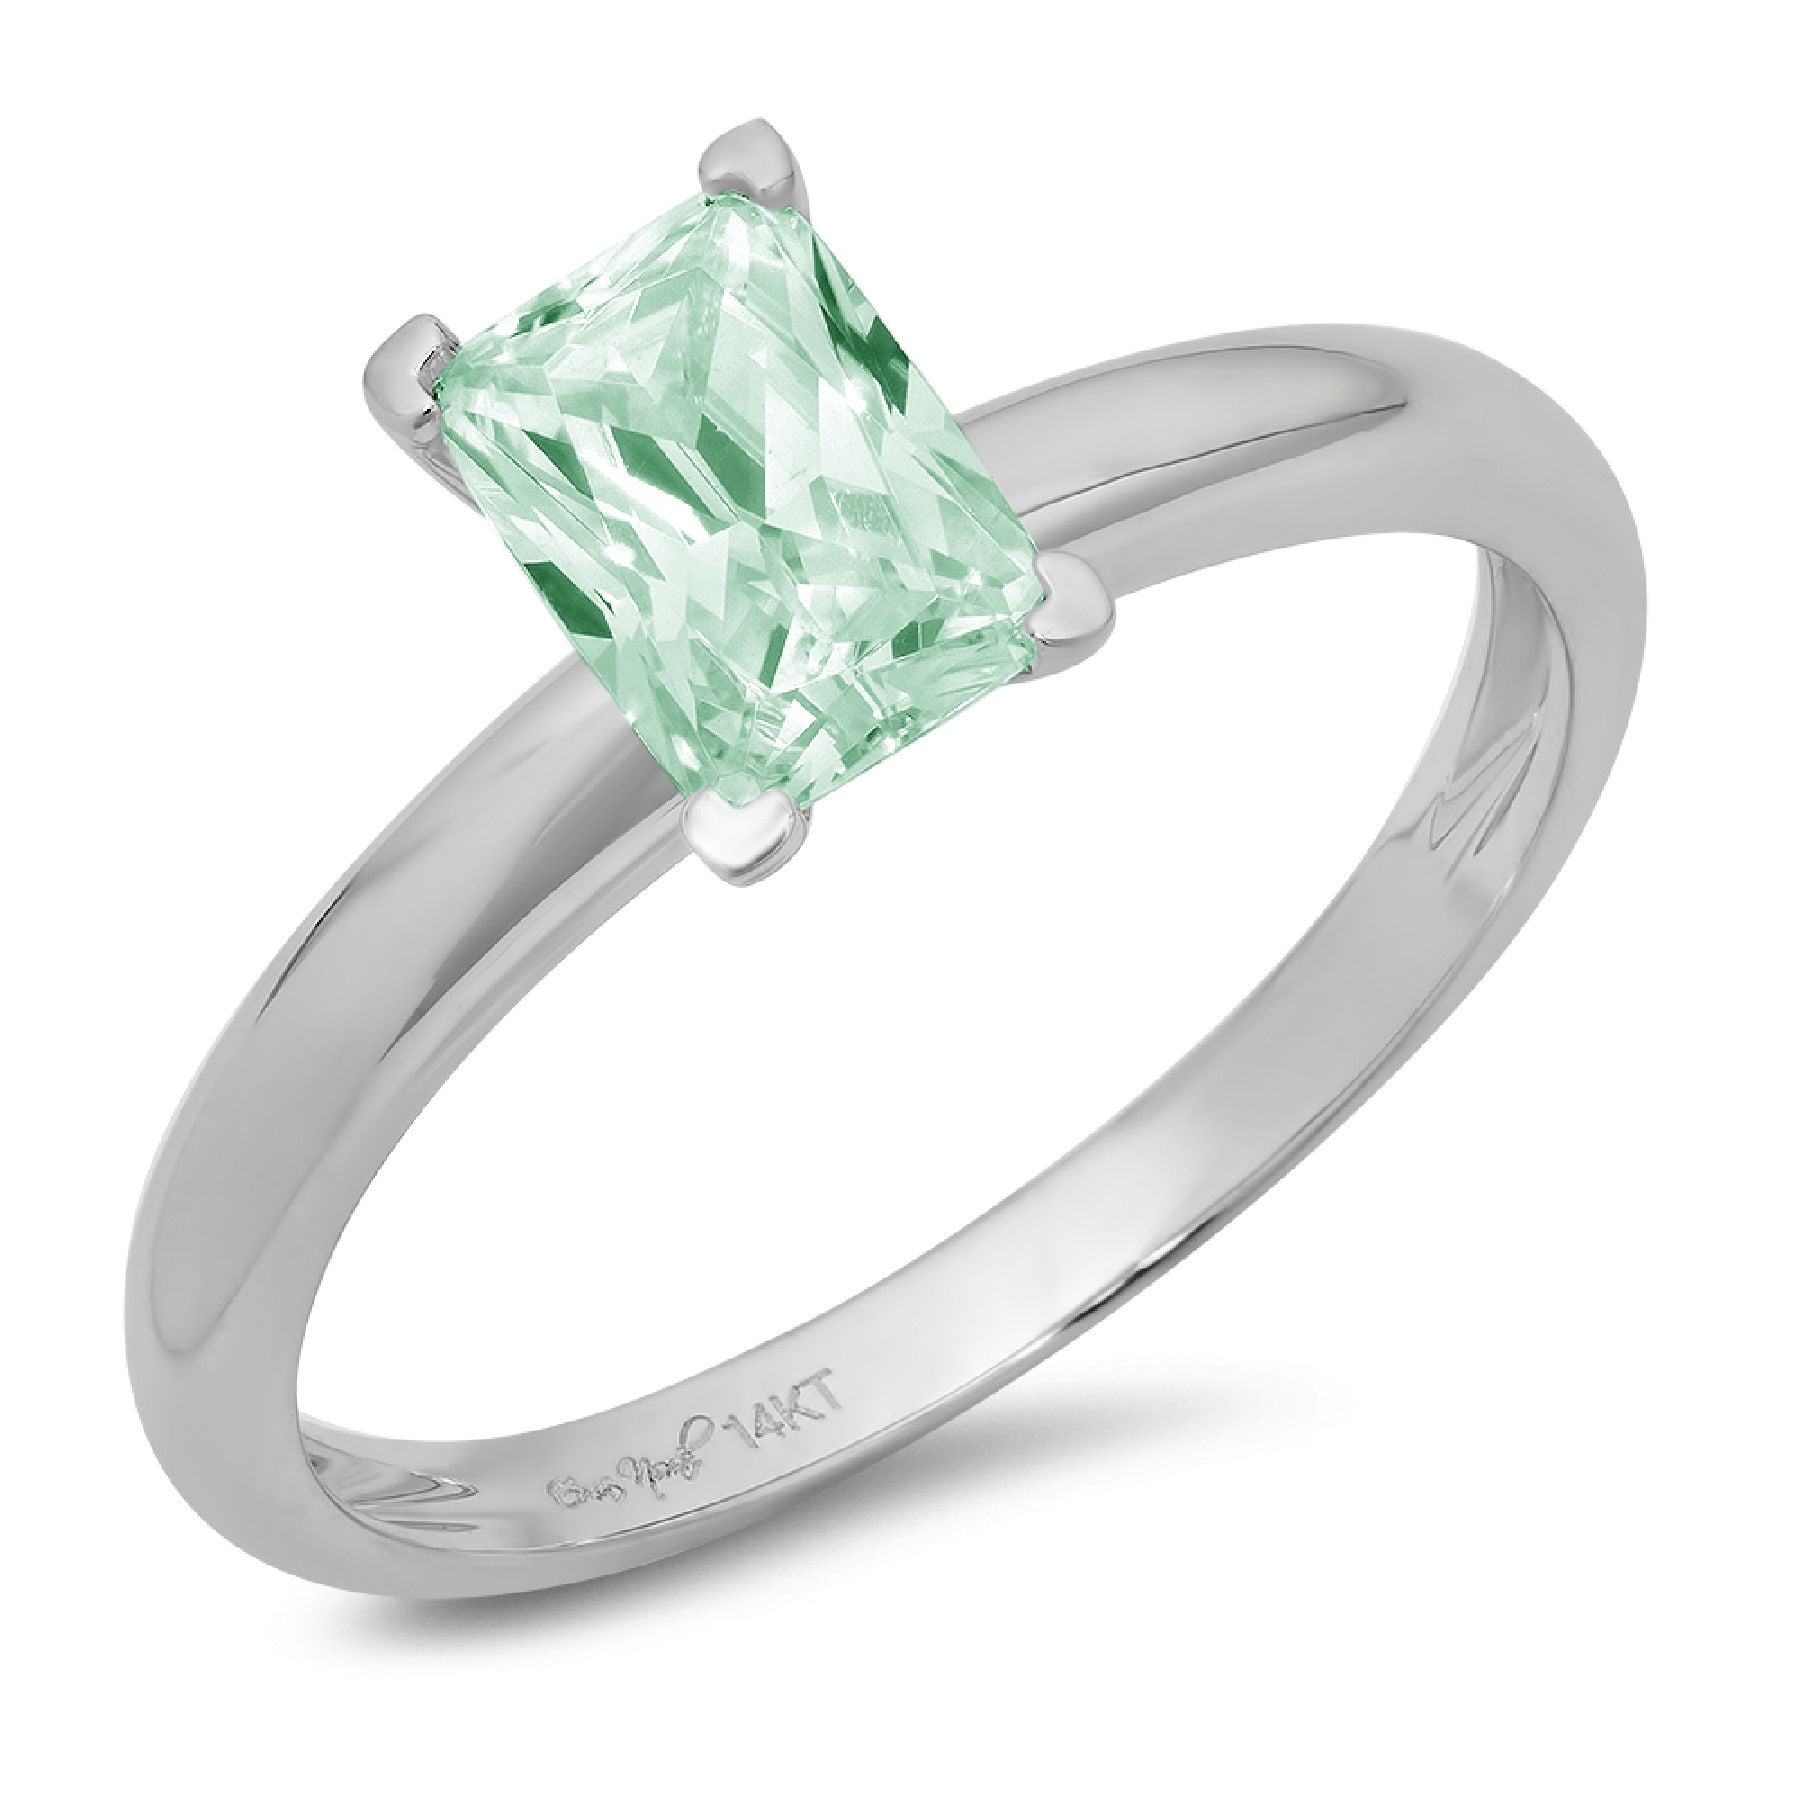 Details about   1.66 Cushion Blue CZ Statement Engagement Wedding Designer Ring 14k White Gold